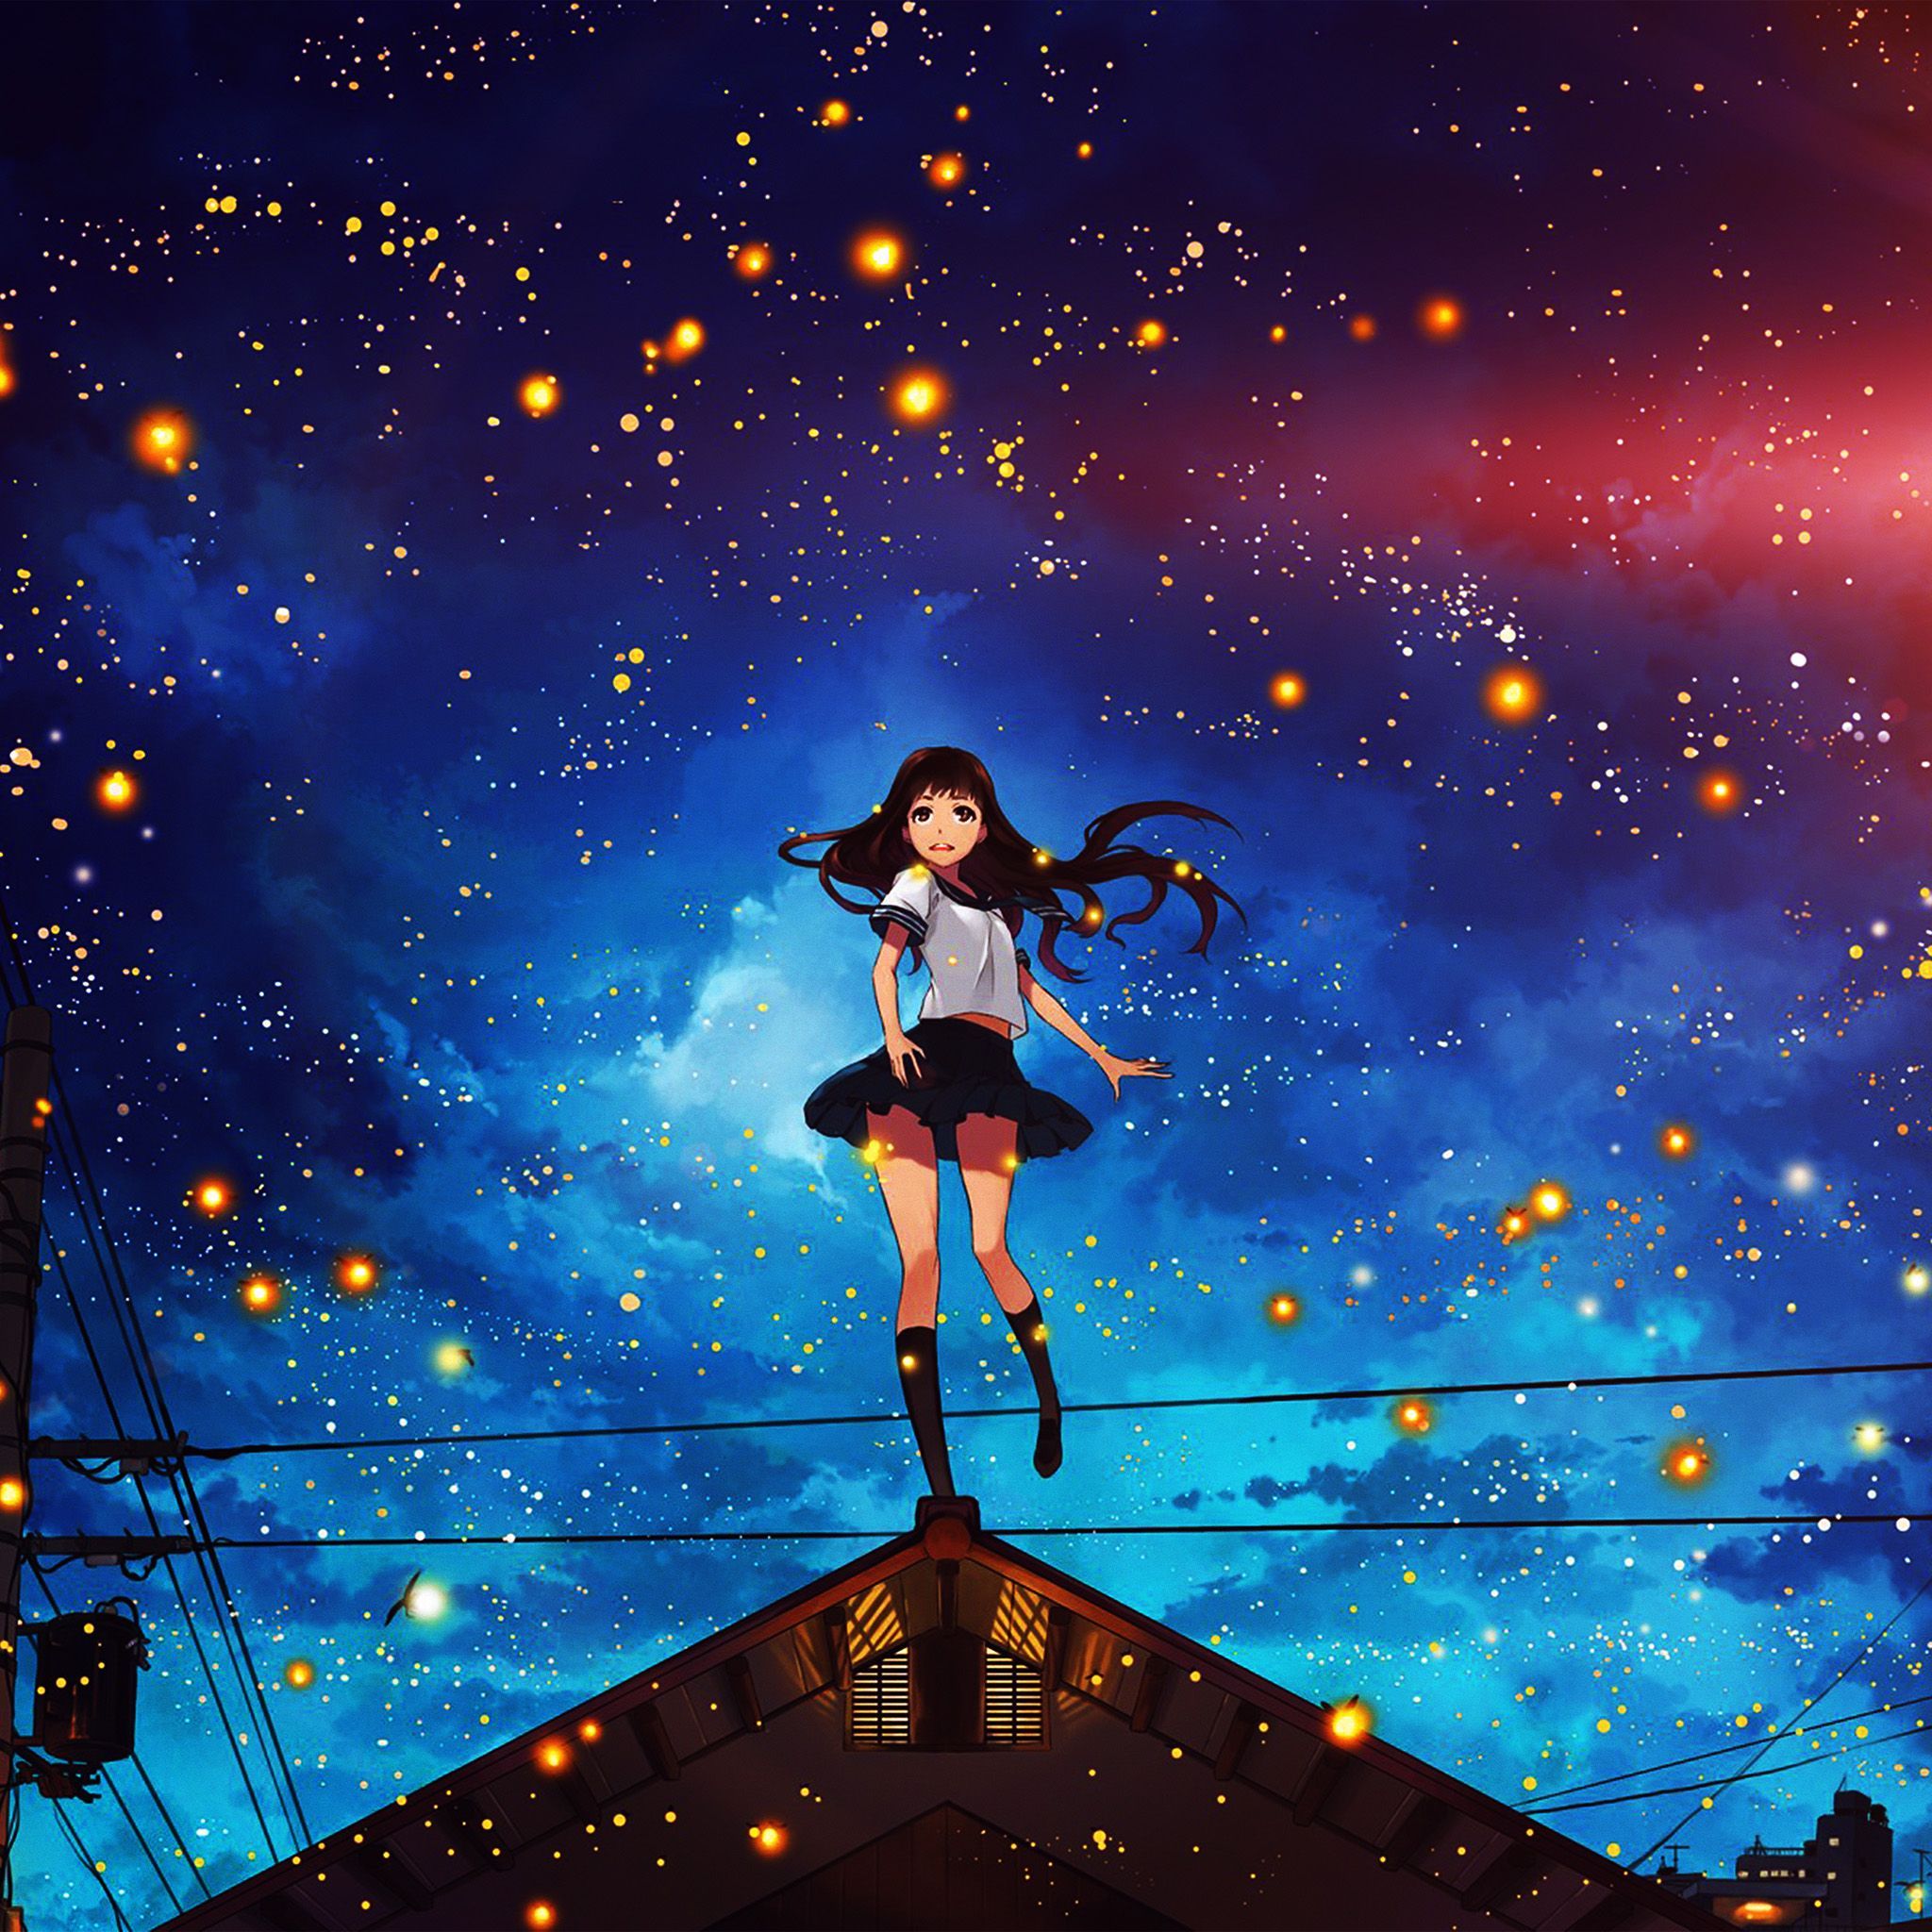 Anime Space Girl Wallpaper Free .wallpaperaccess.com